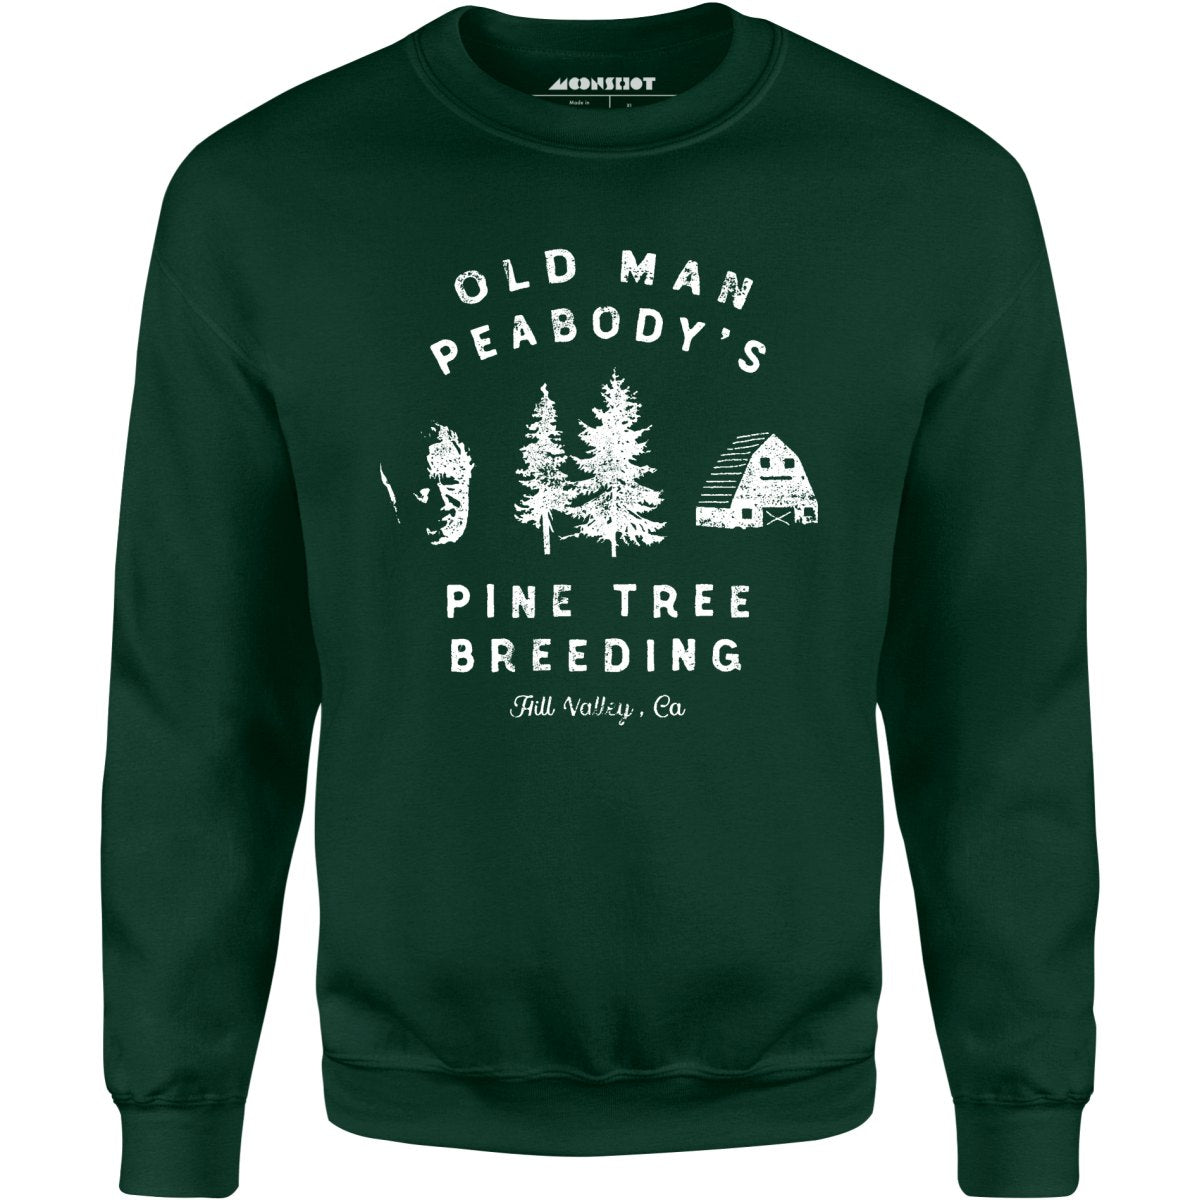 Old Man Peabody's Pine Tree Breeding - Unisex Sweatshirt